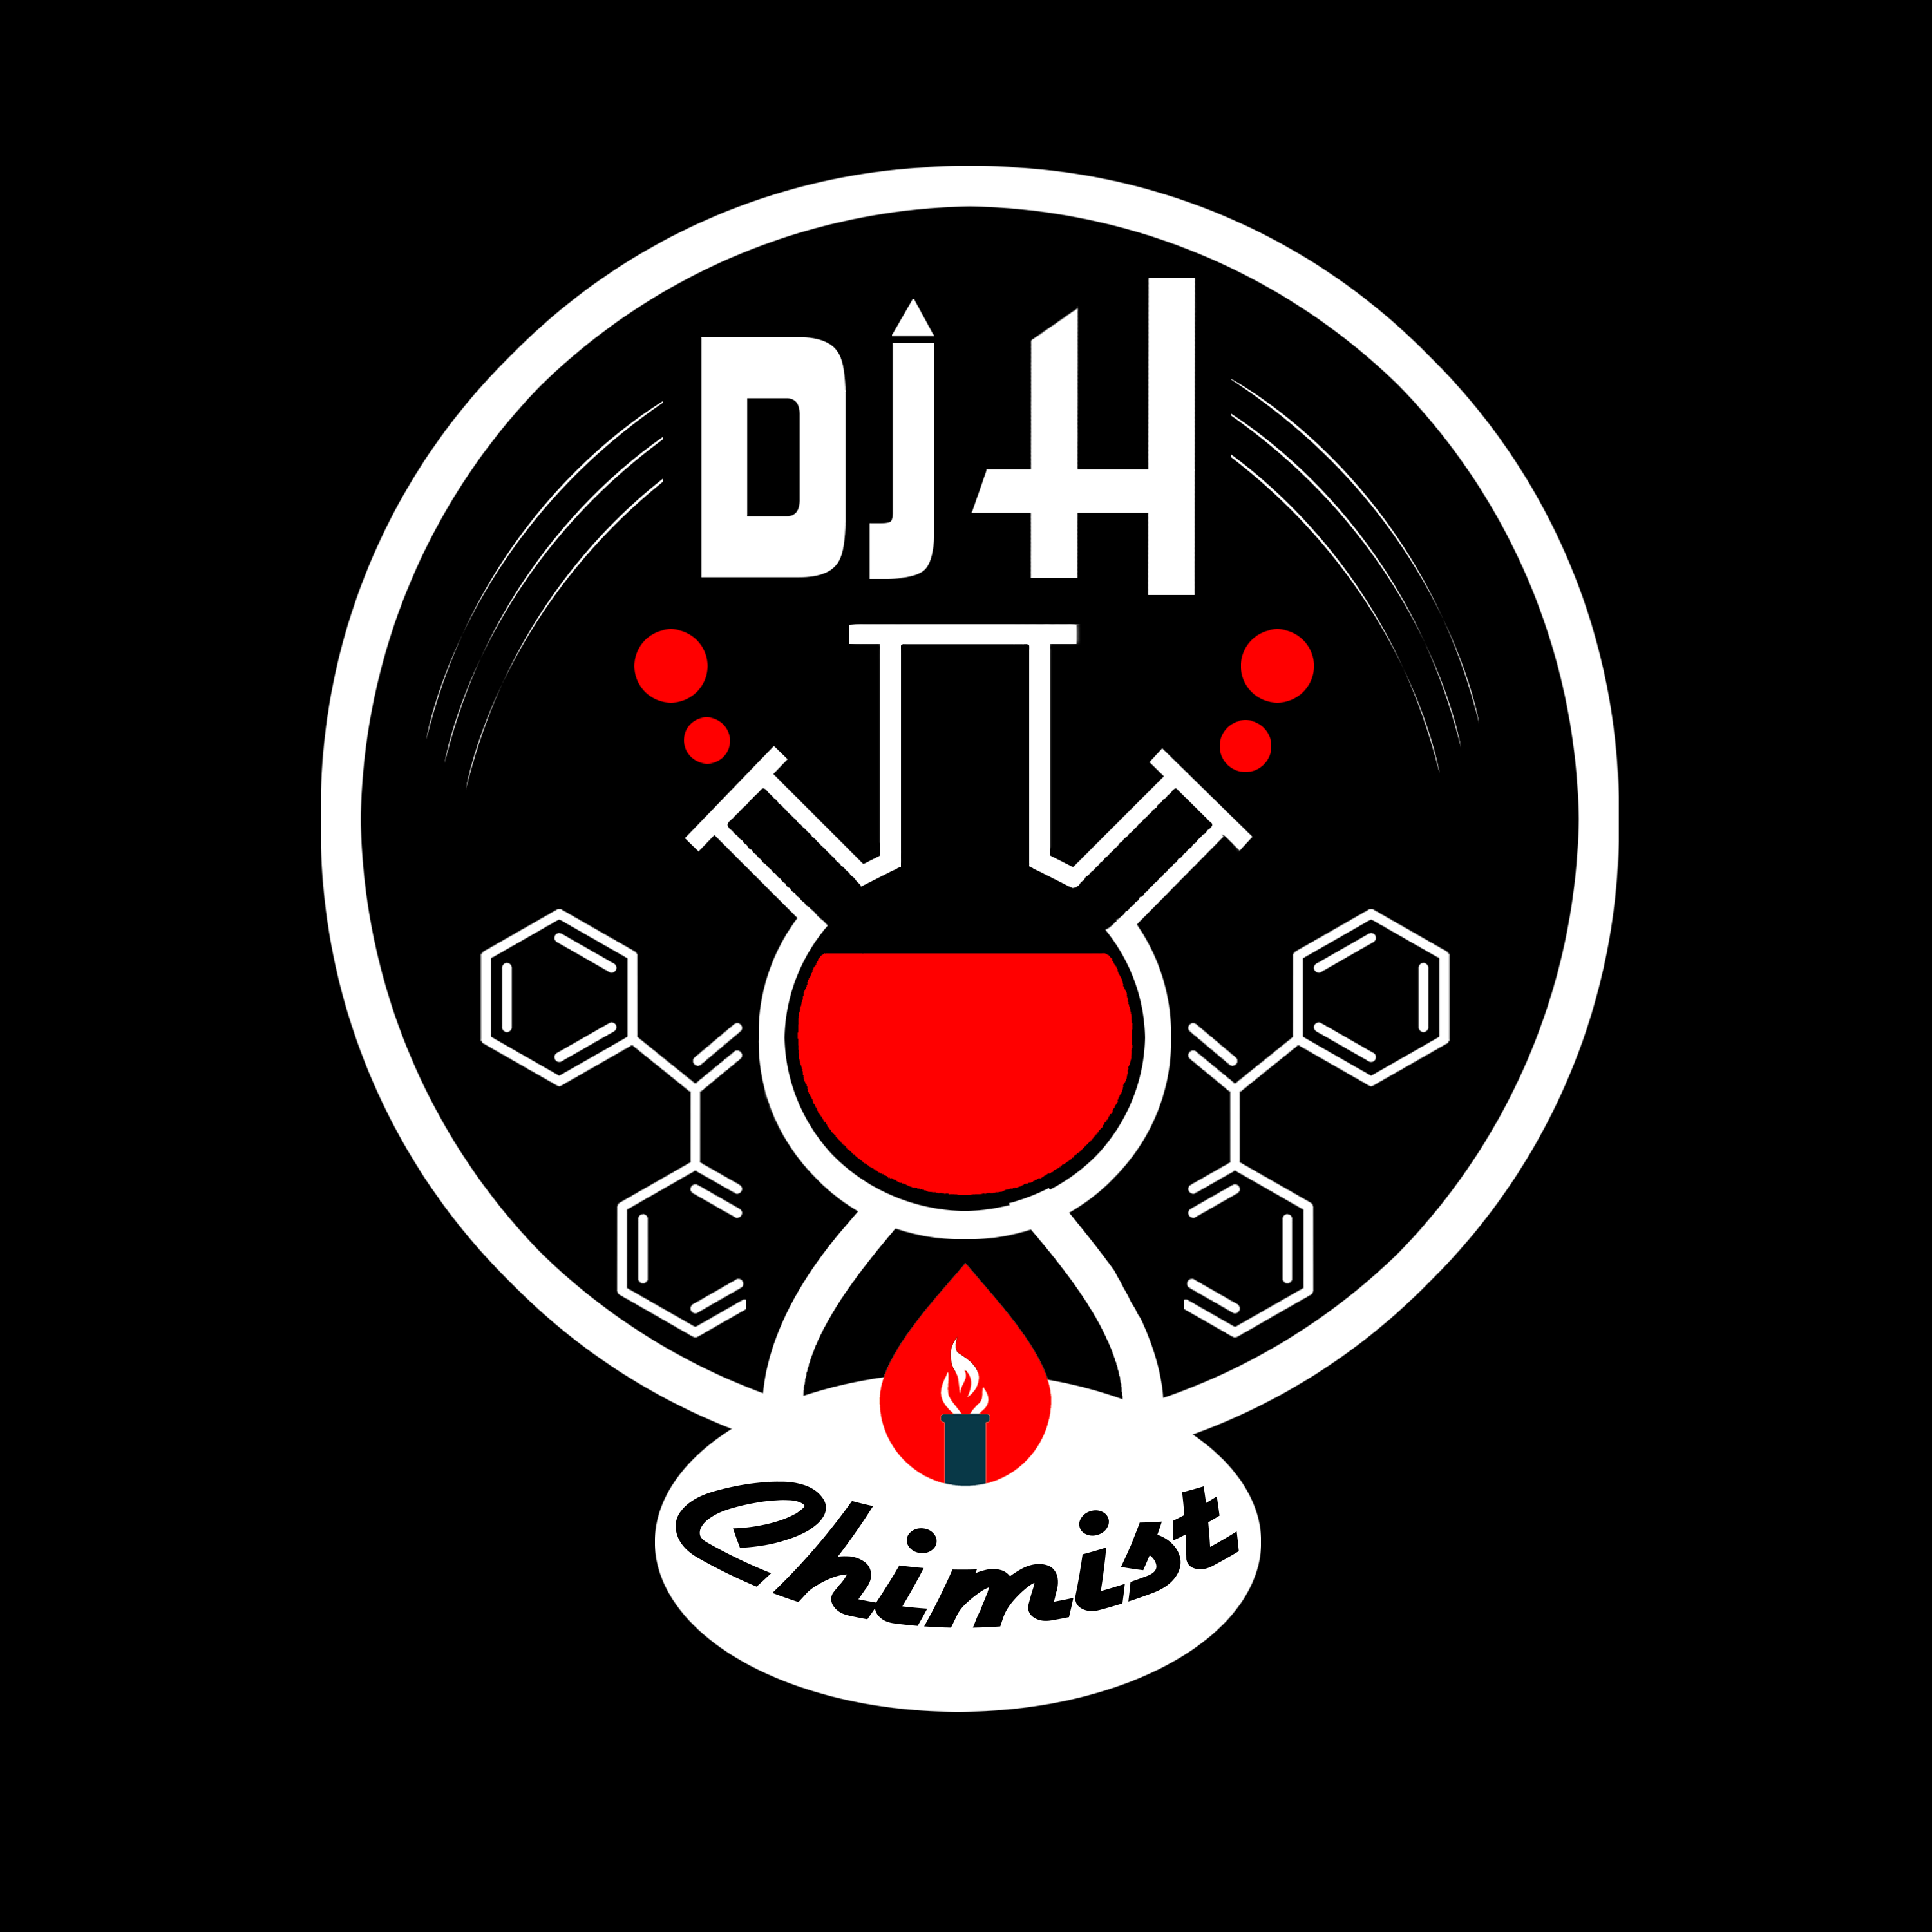 DJ H. Chimist